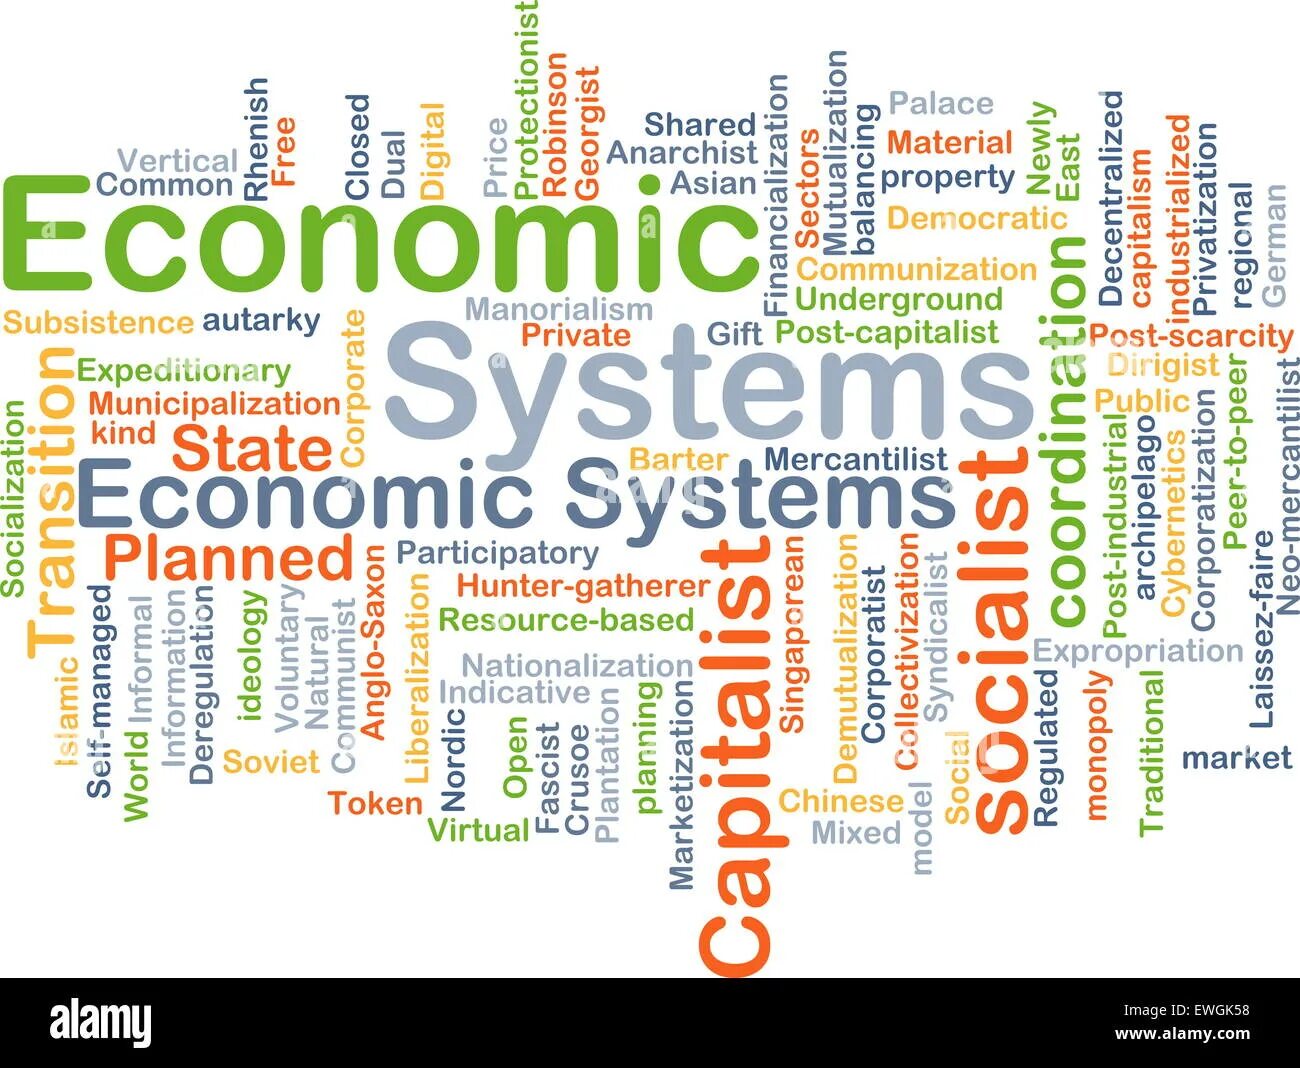 Economy system. The economic System. Types of economic Systems. Kinds of Economics. Types of economy.